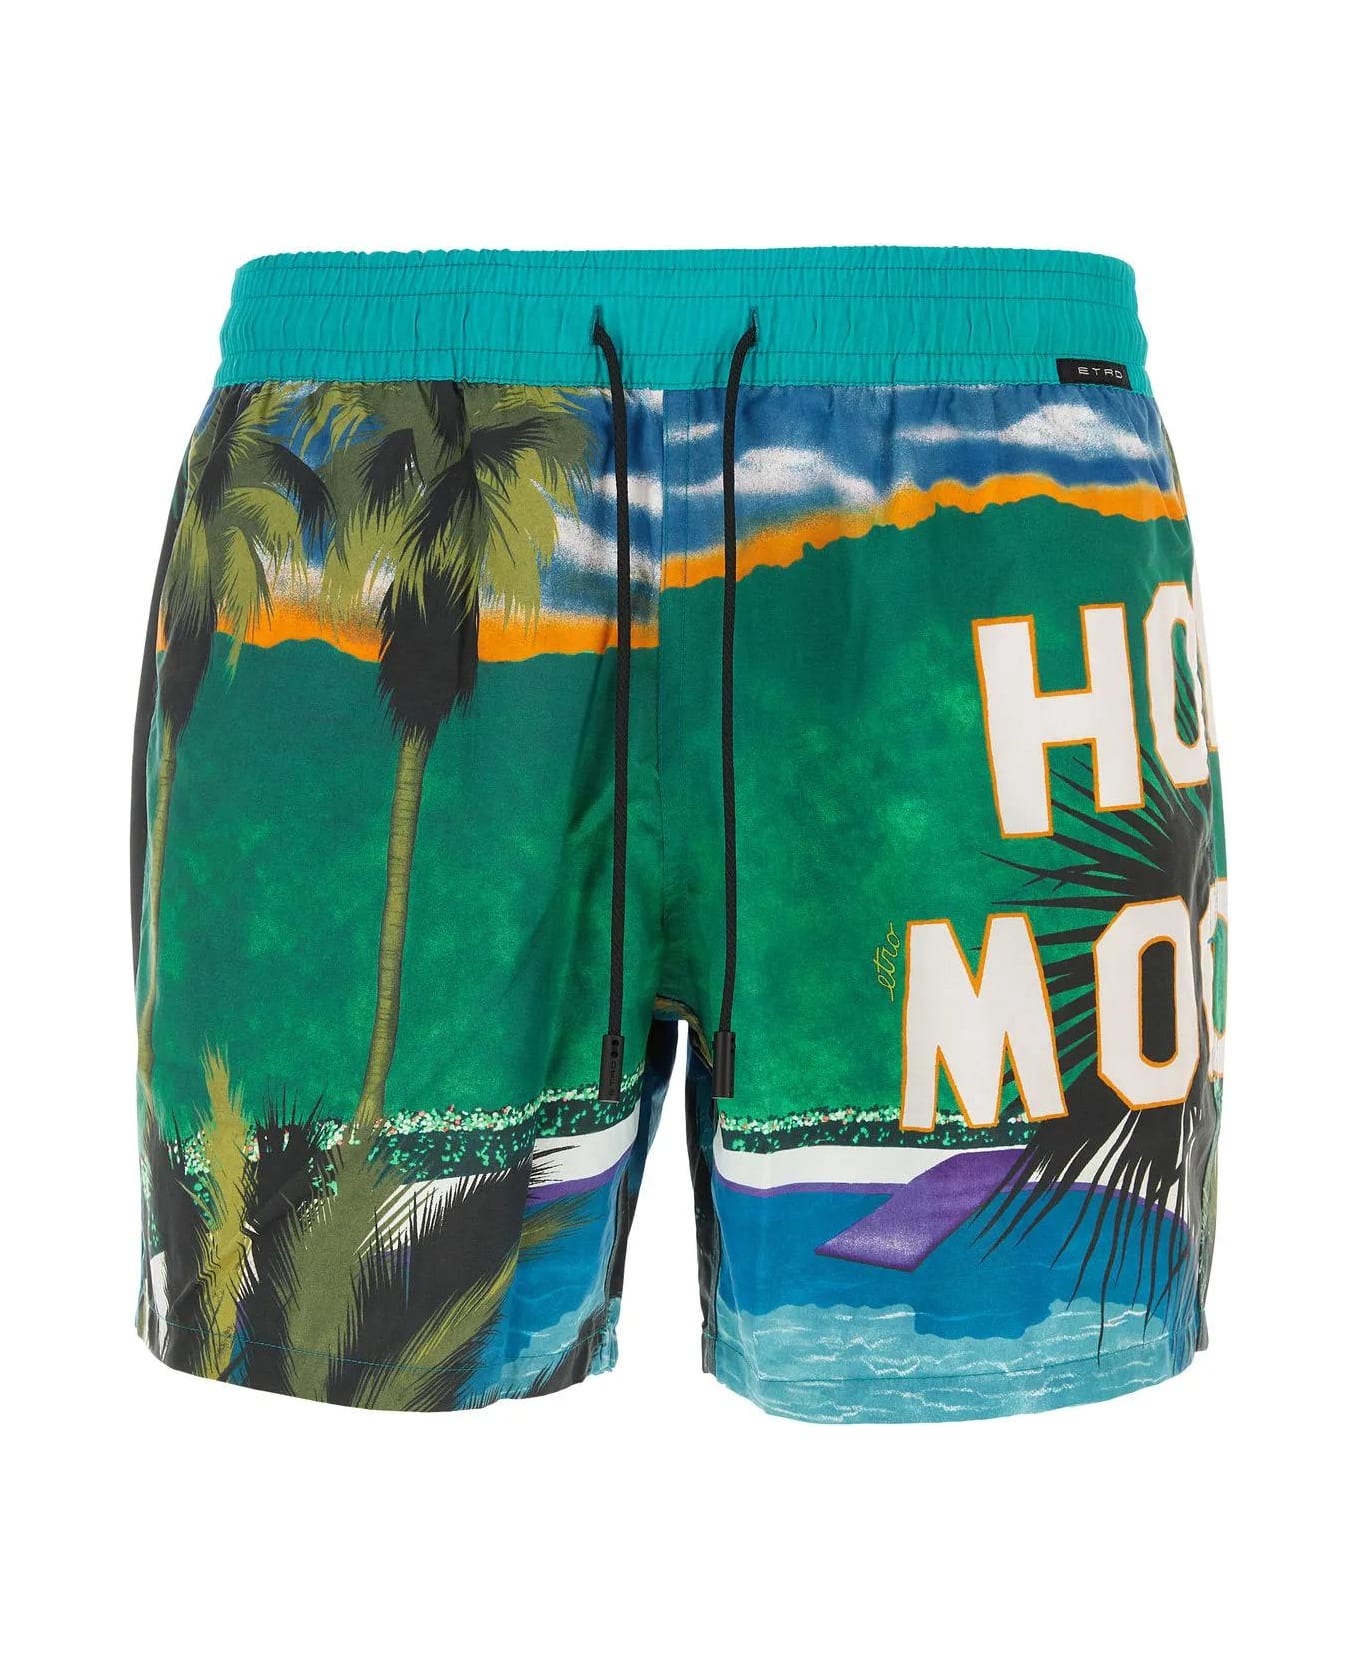 Etro Printed Nylon Swimming Shorts - Multicolor